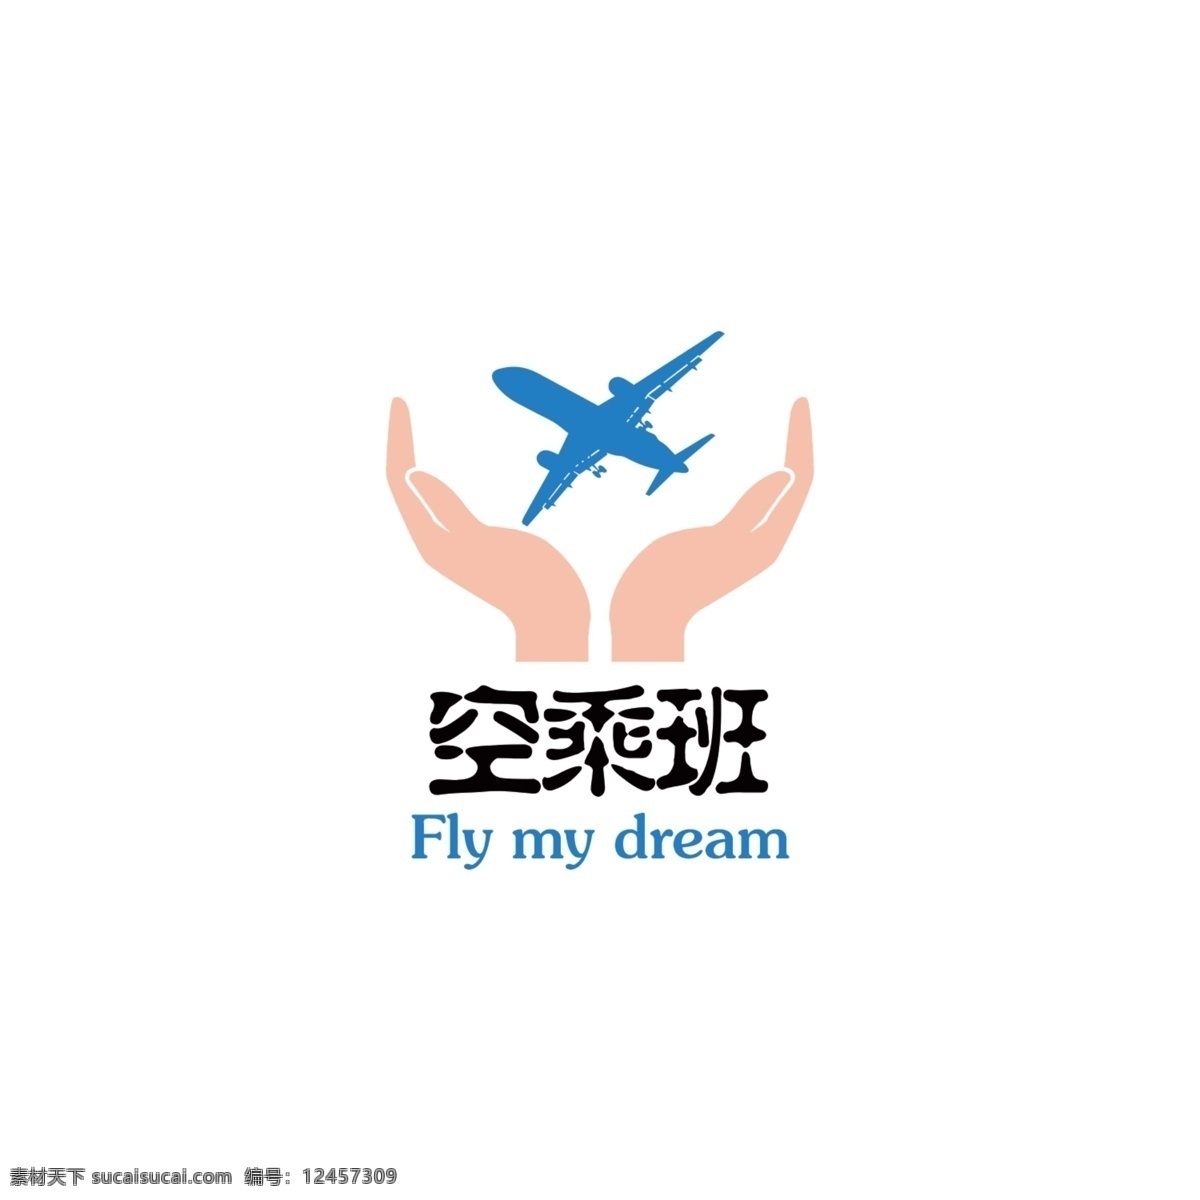 空乘logo 飞机 空乘 logo logo设计 空乘班 班级logo